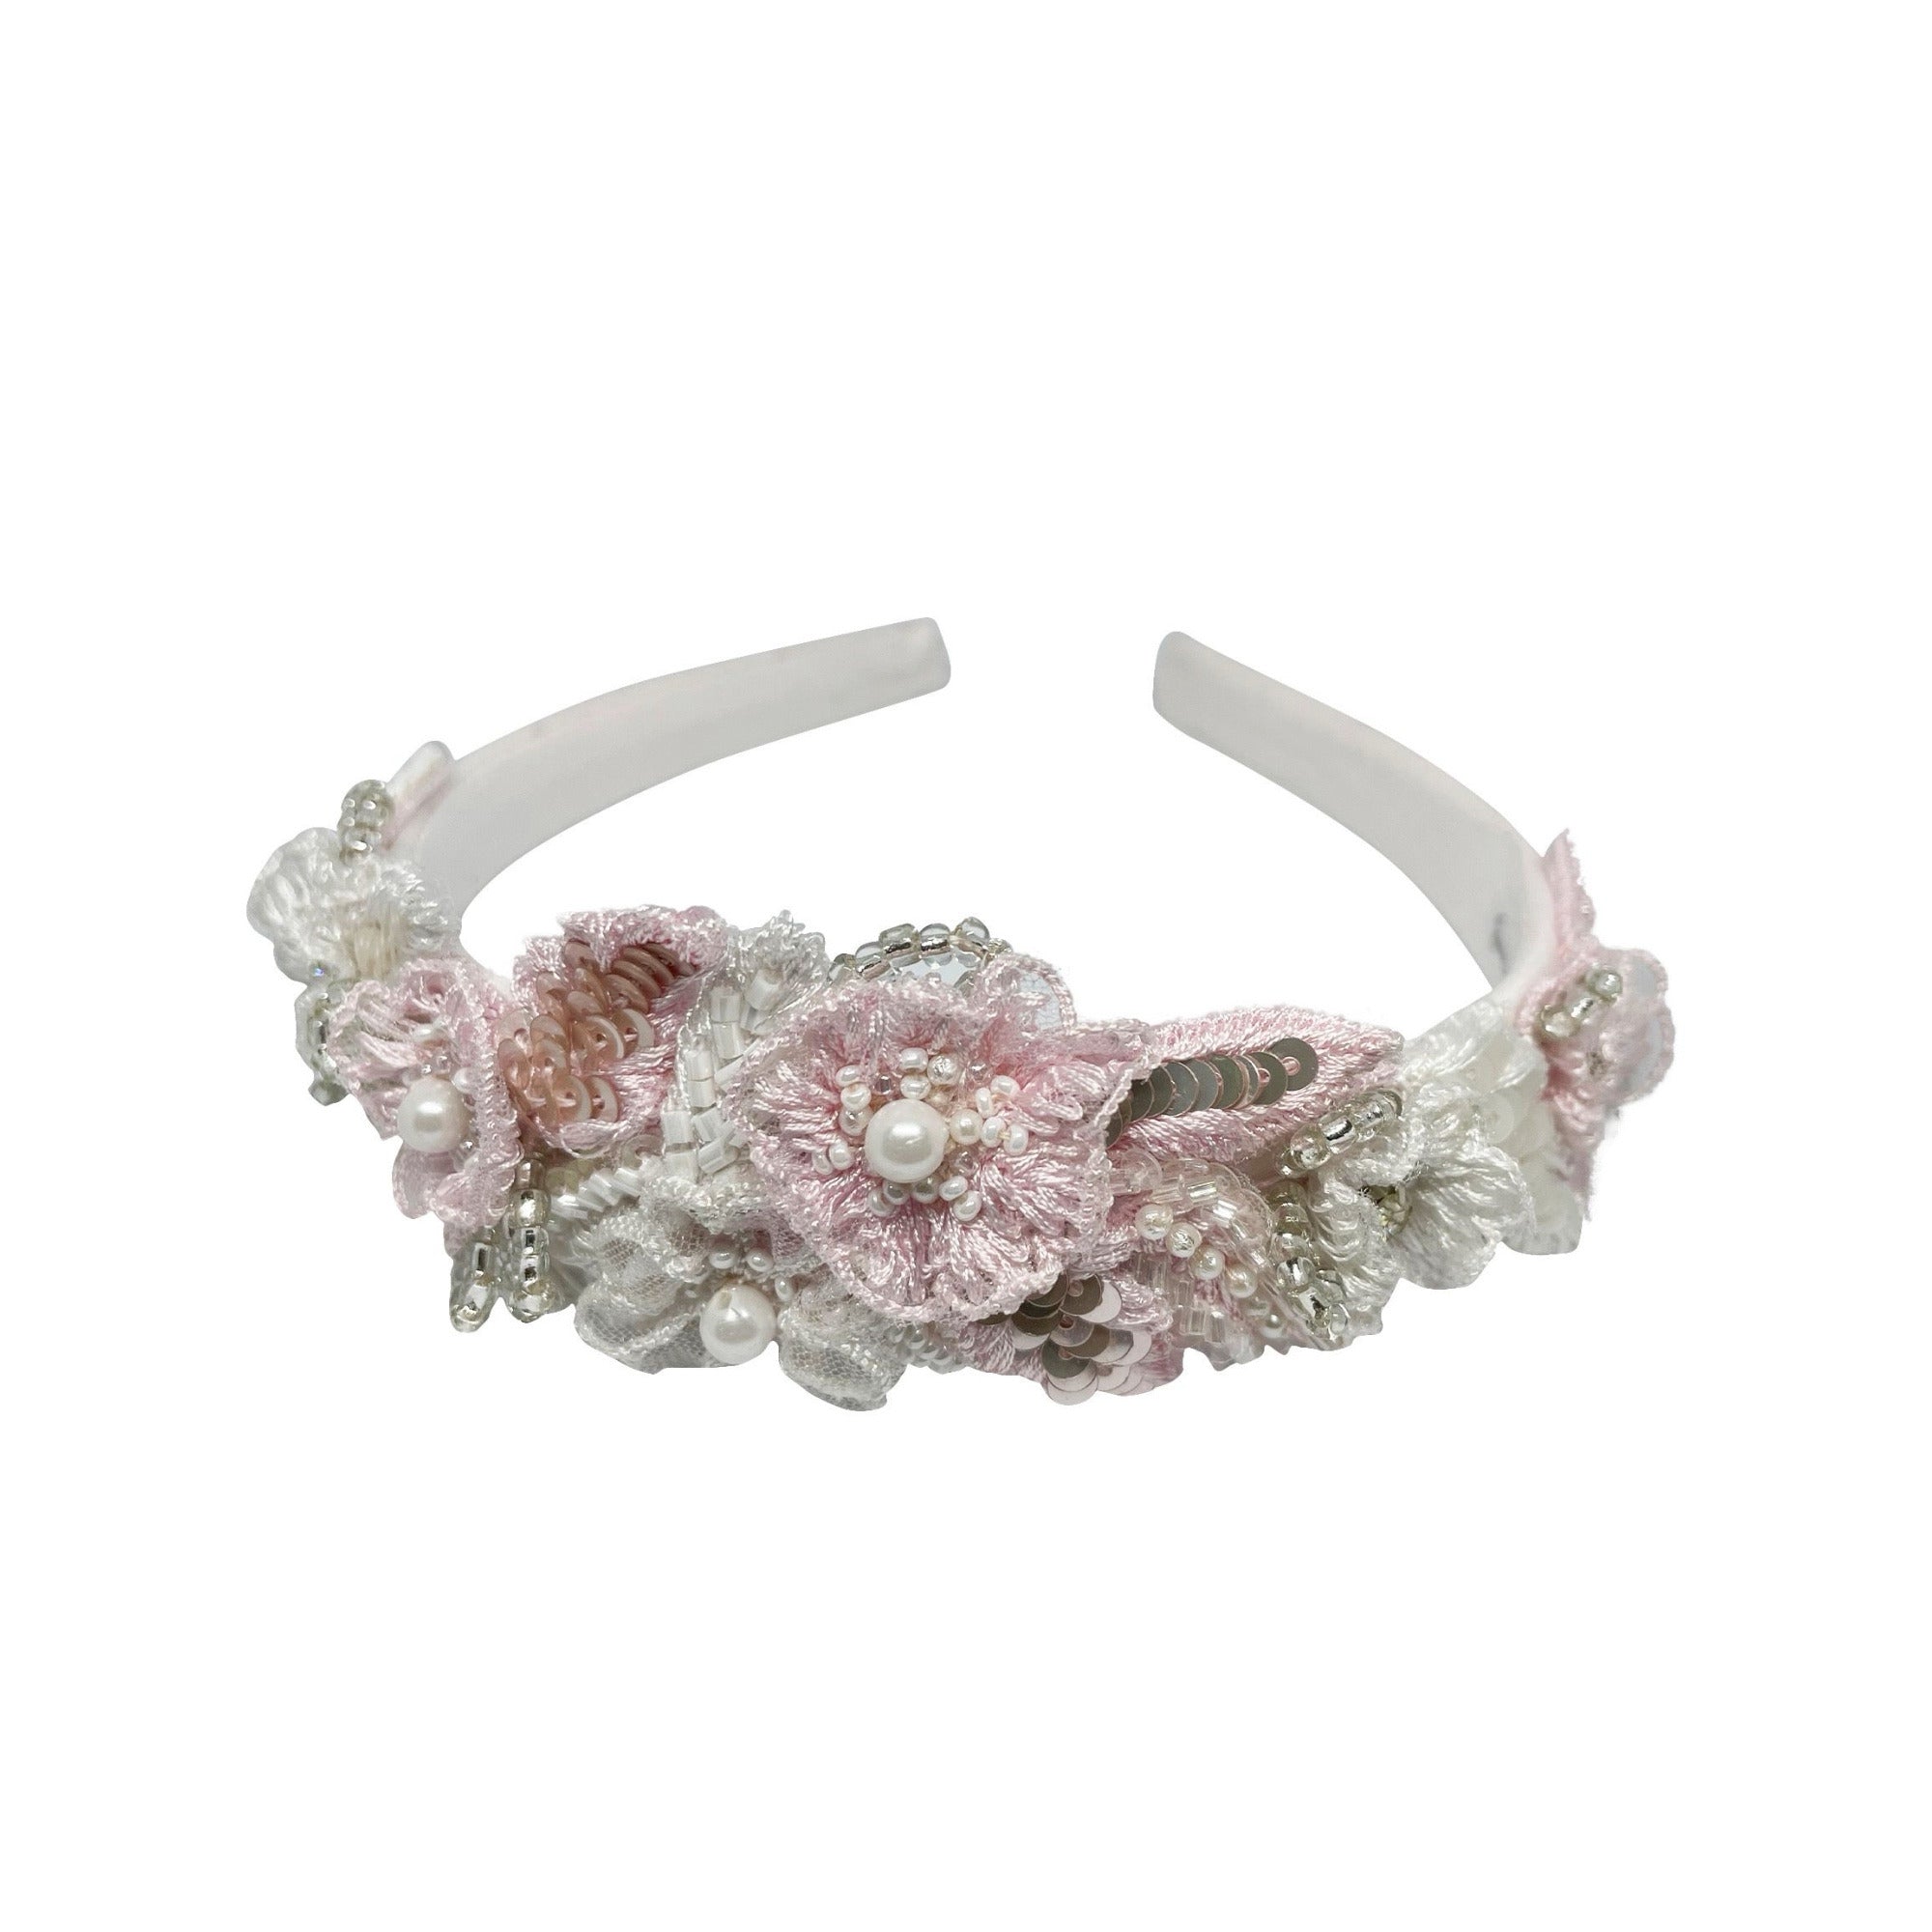 The Pink & White Alaia Hairband